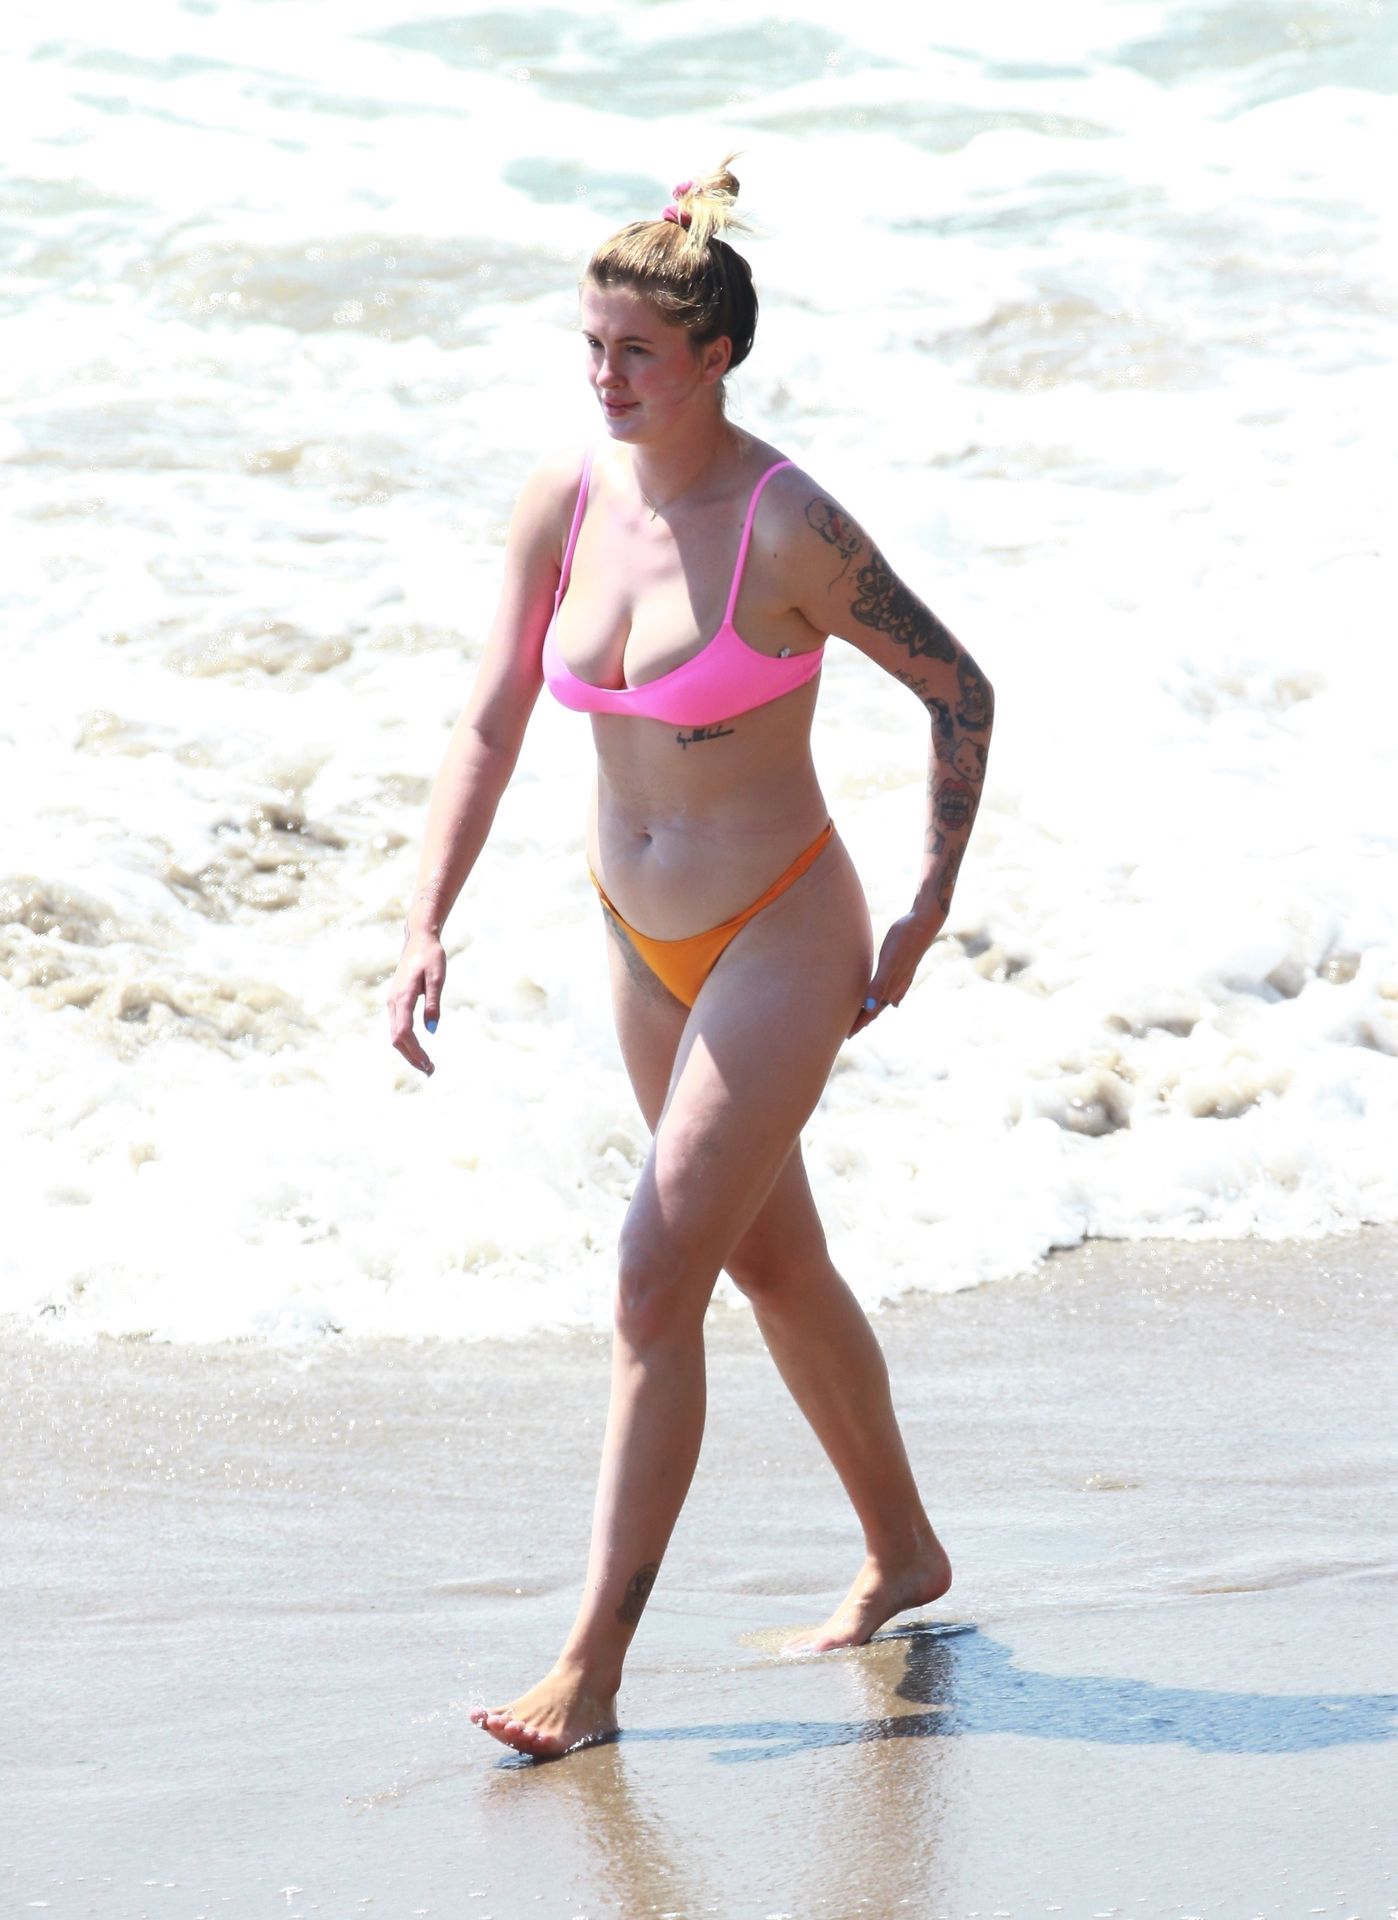 Ireland Baldwin Beats the Heat in Her Bikini at the Beach (34 Photos)